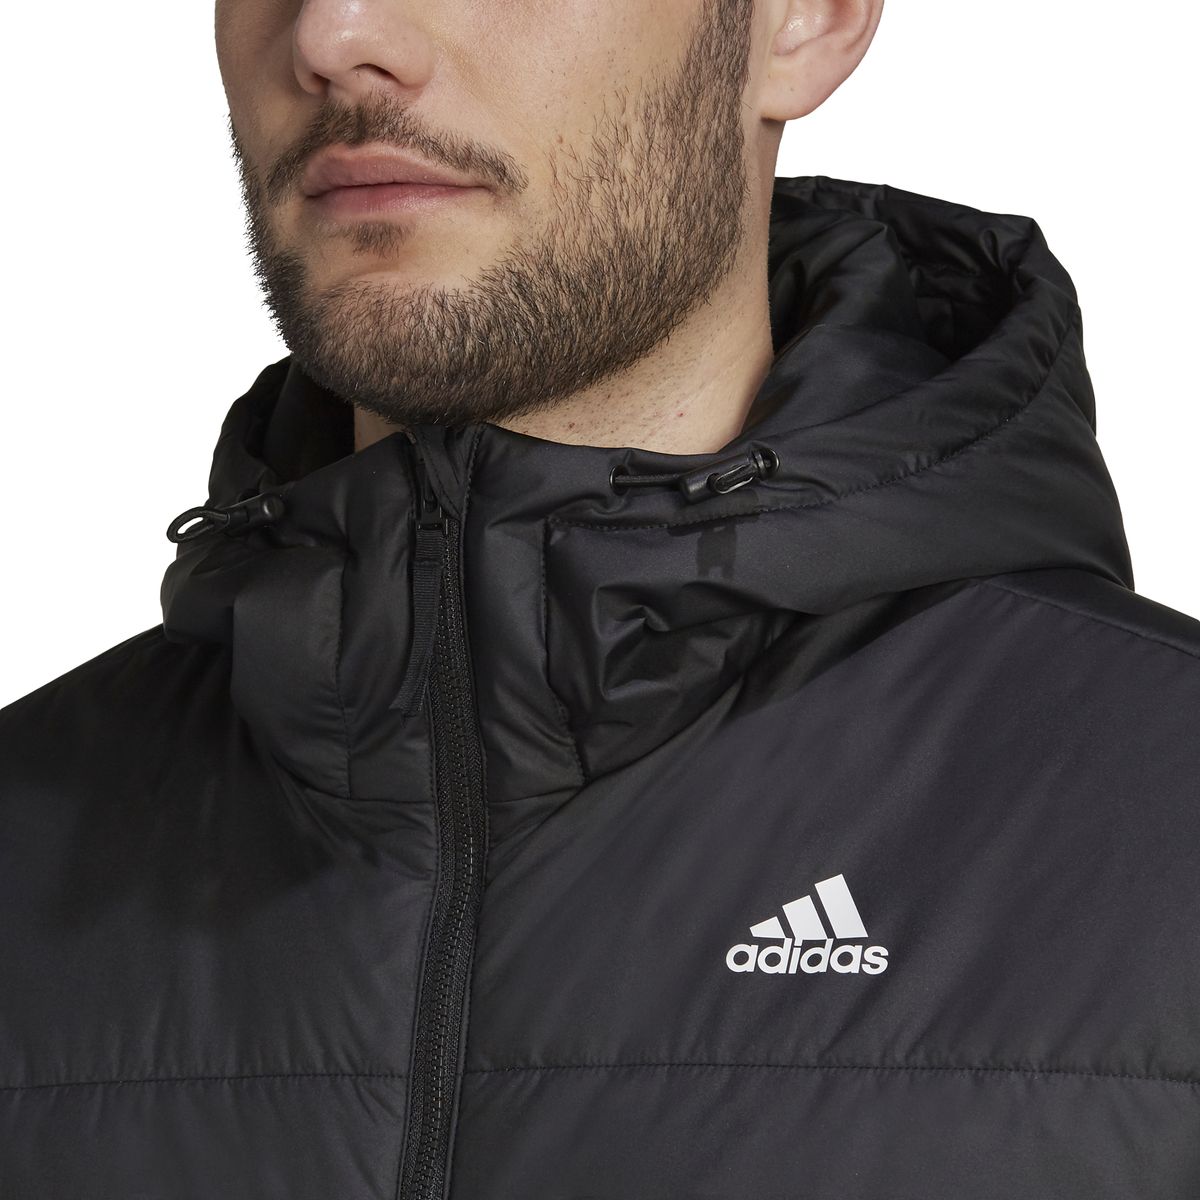 Adidas BSC Insulated Hooded Jacke Herren_5